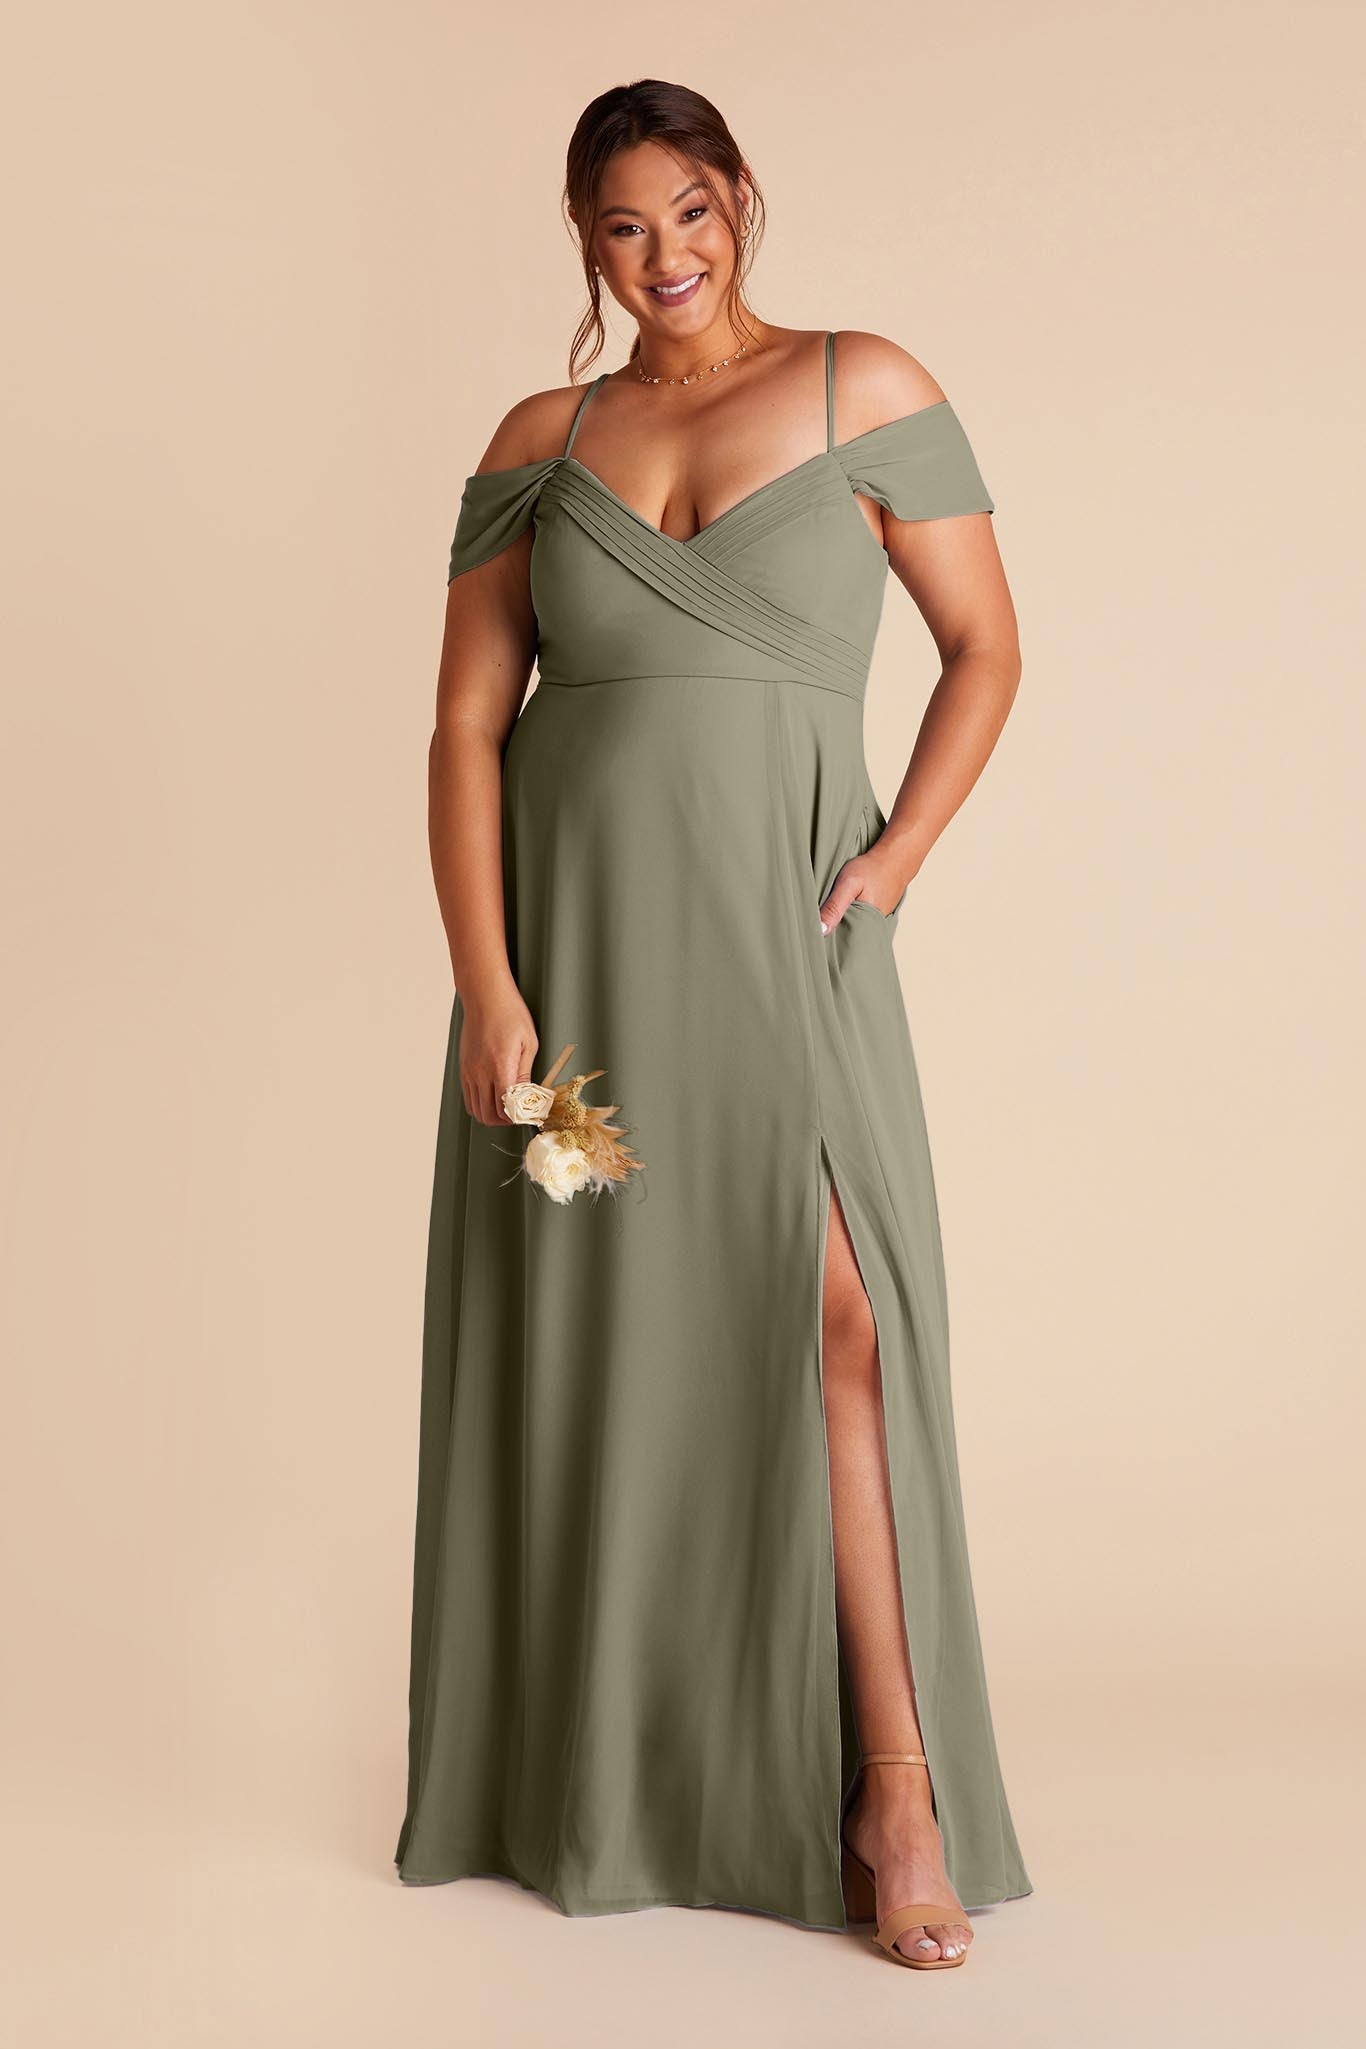 Moss Green Spence Convertible Dress by Birdy Grey